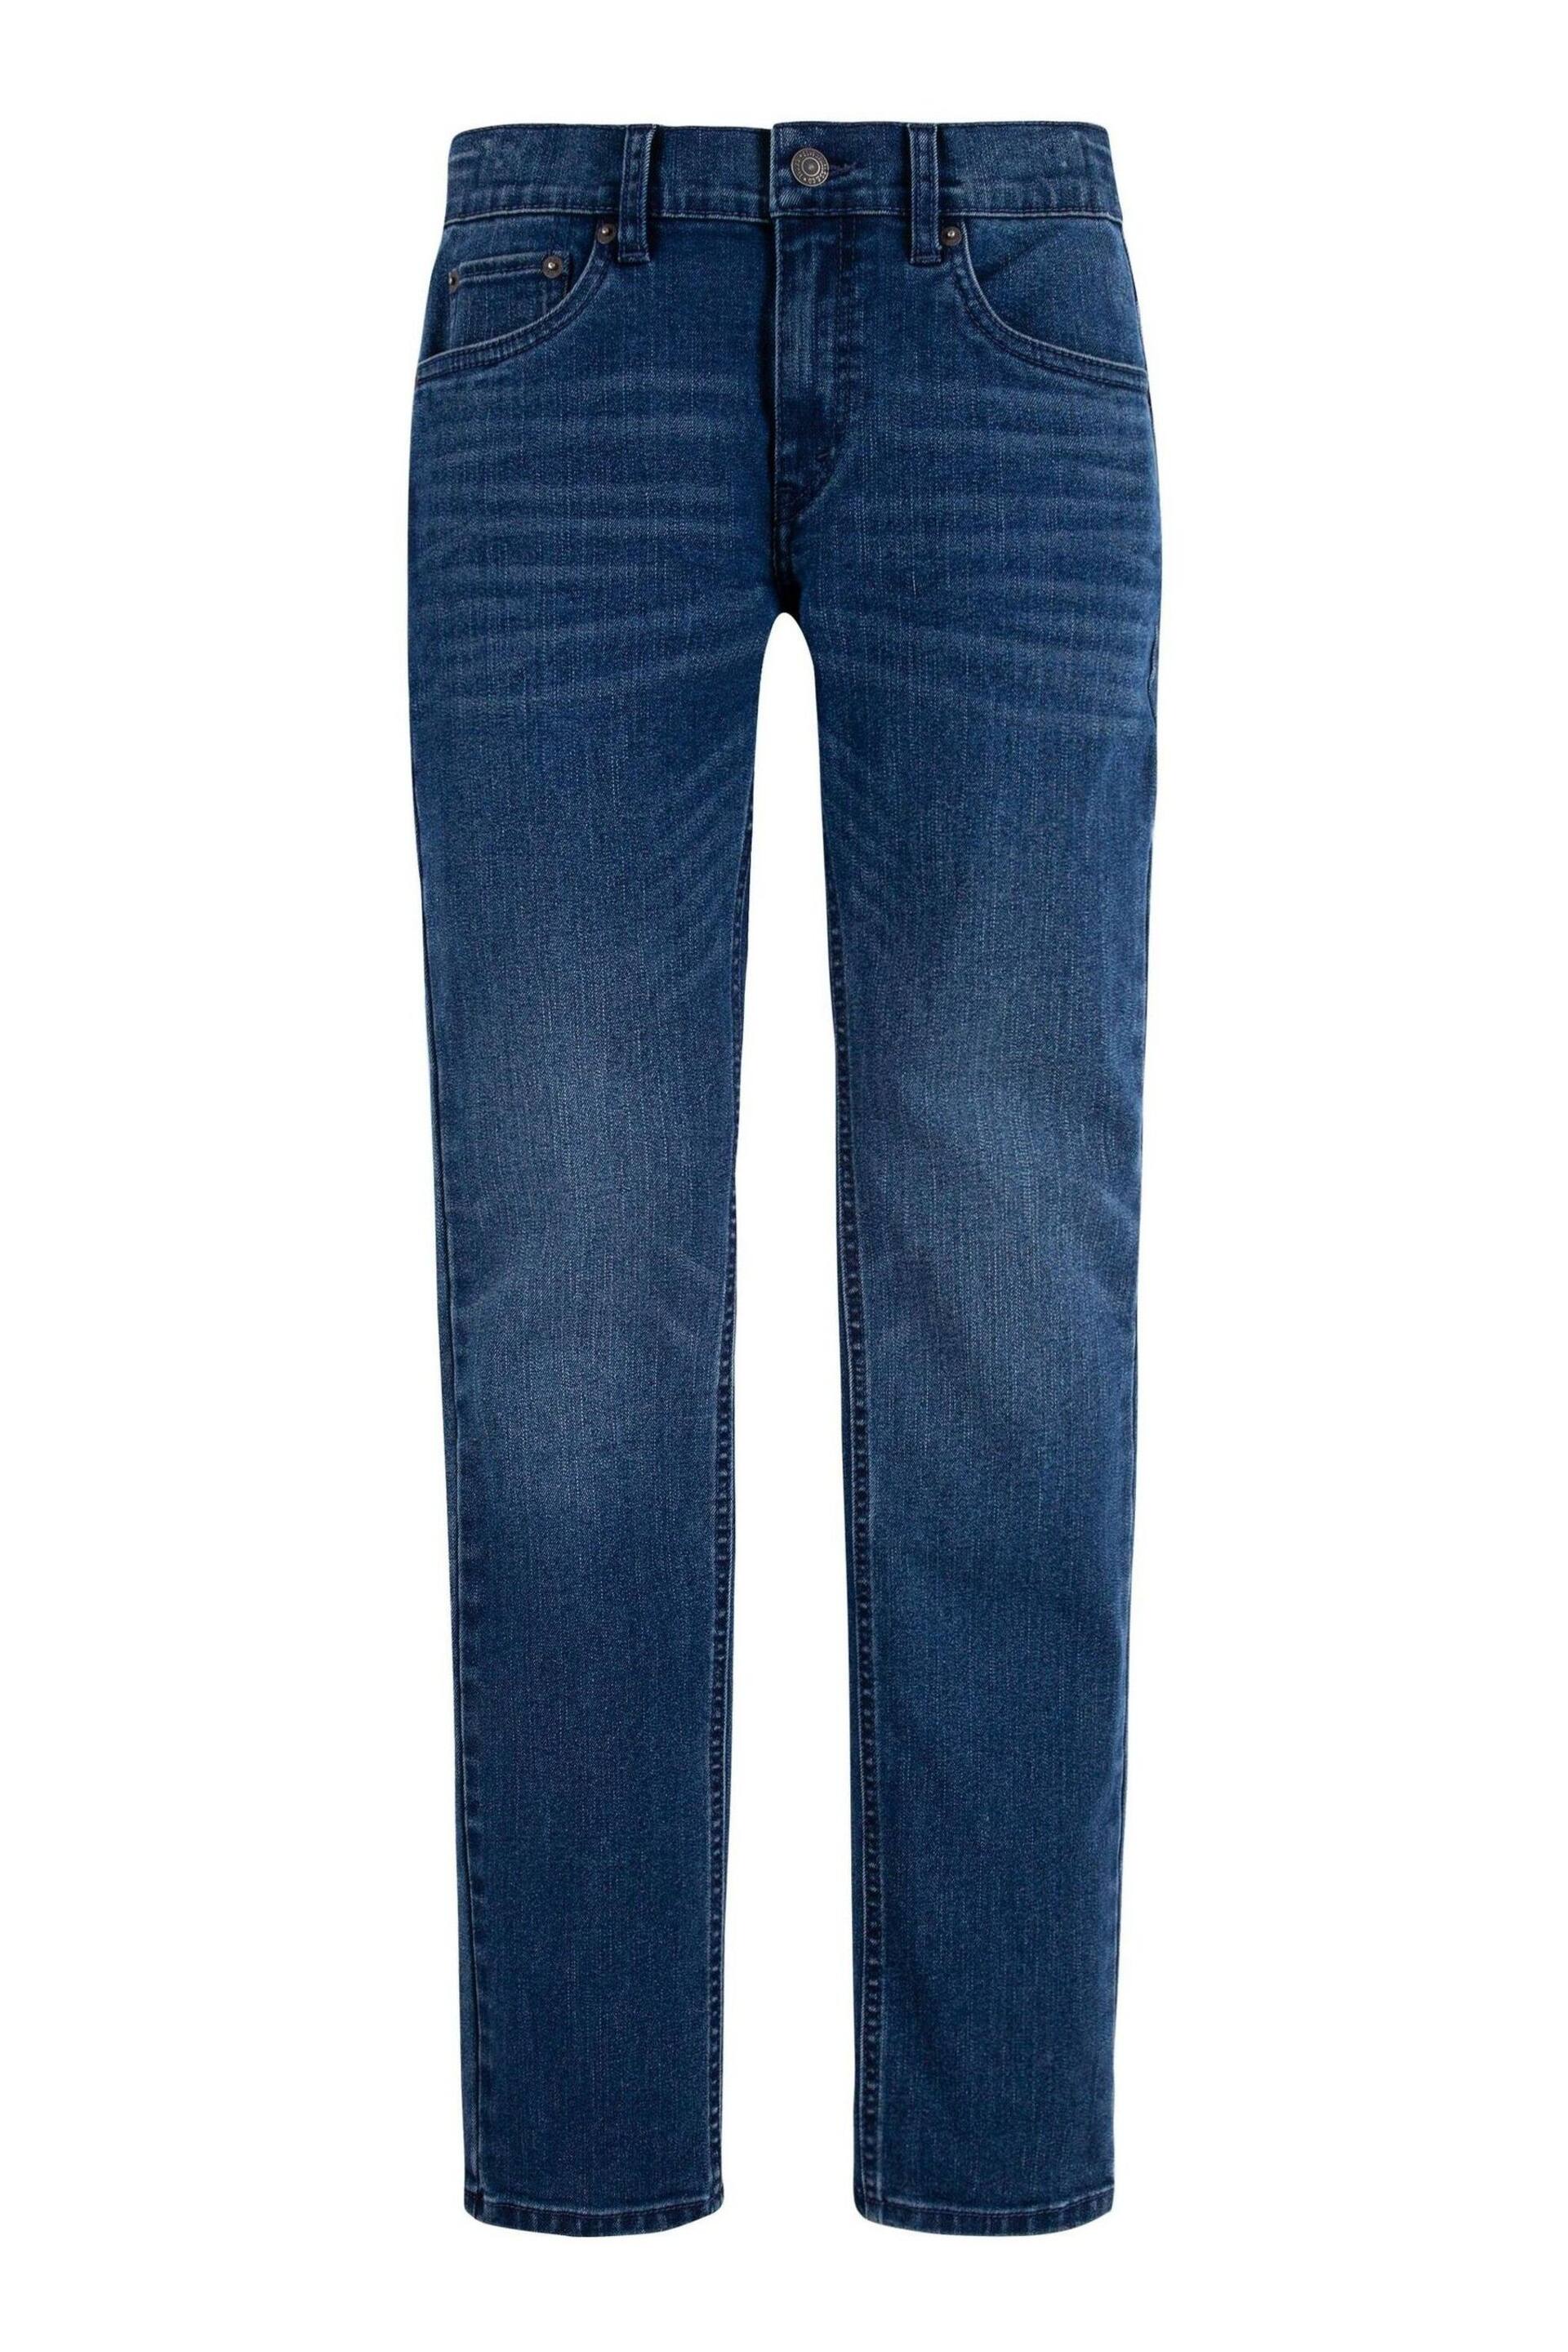 Levi's® Plato Kids 510™ Skinny Fit Jeans - Image 4 of 5